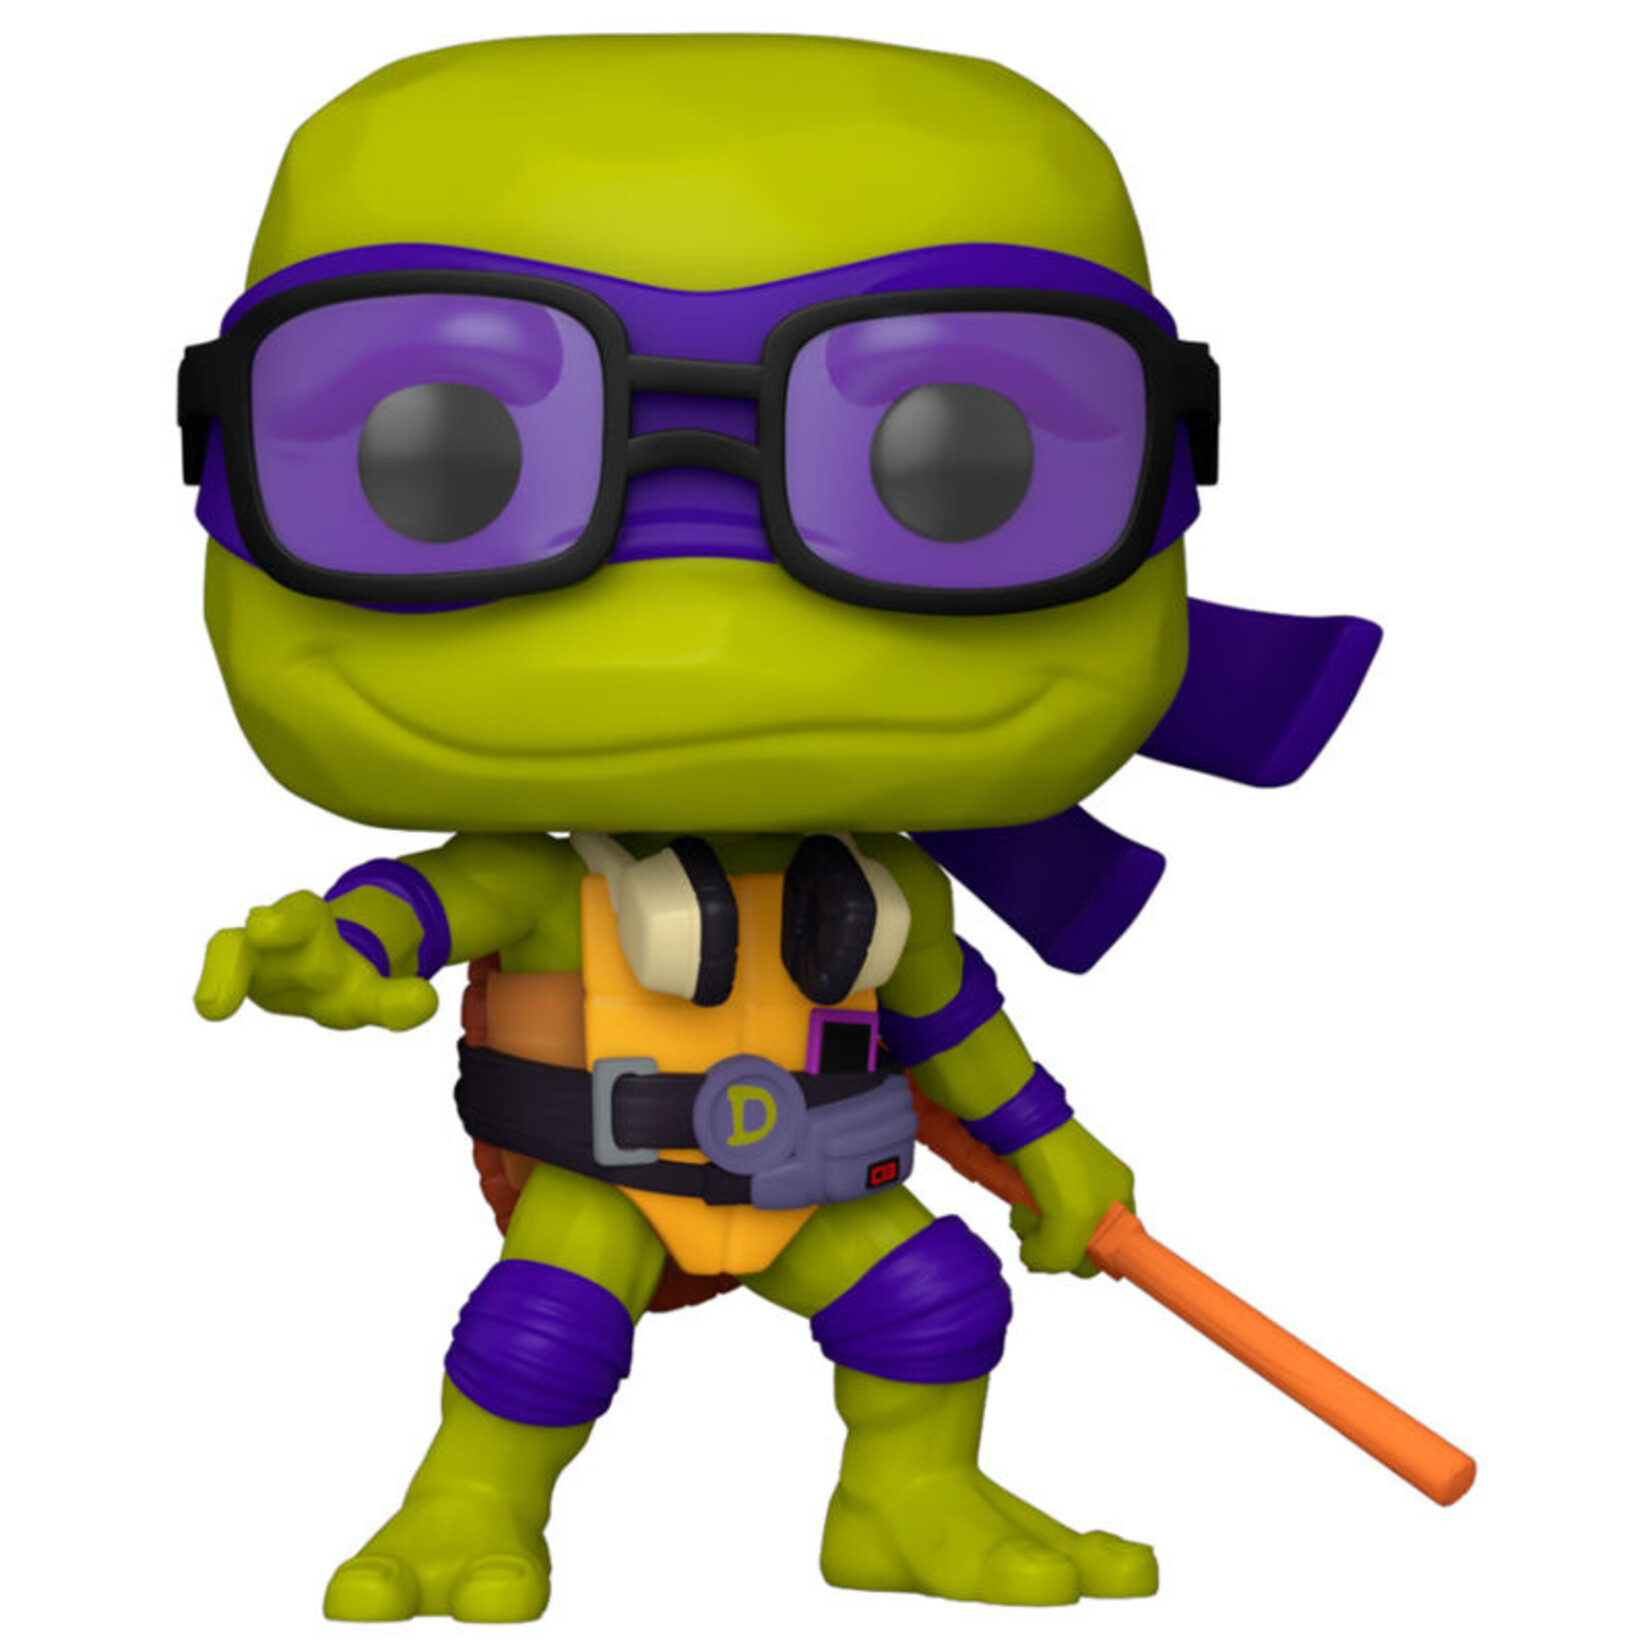 Funko Funko POP! Movies Figure Teenage Mutant Ninja Turtles Mutant Mayhem Donatello